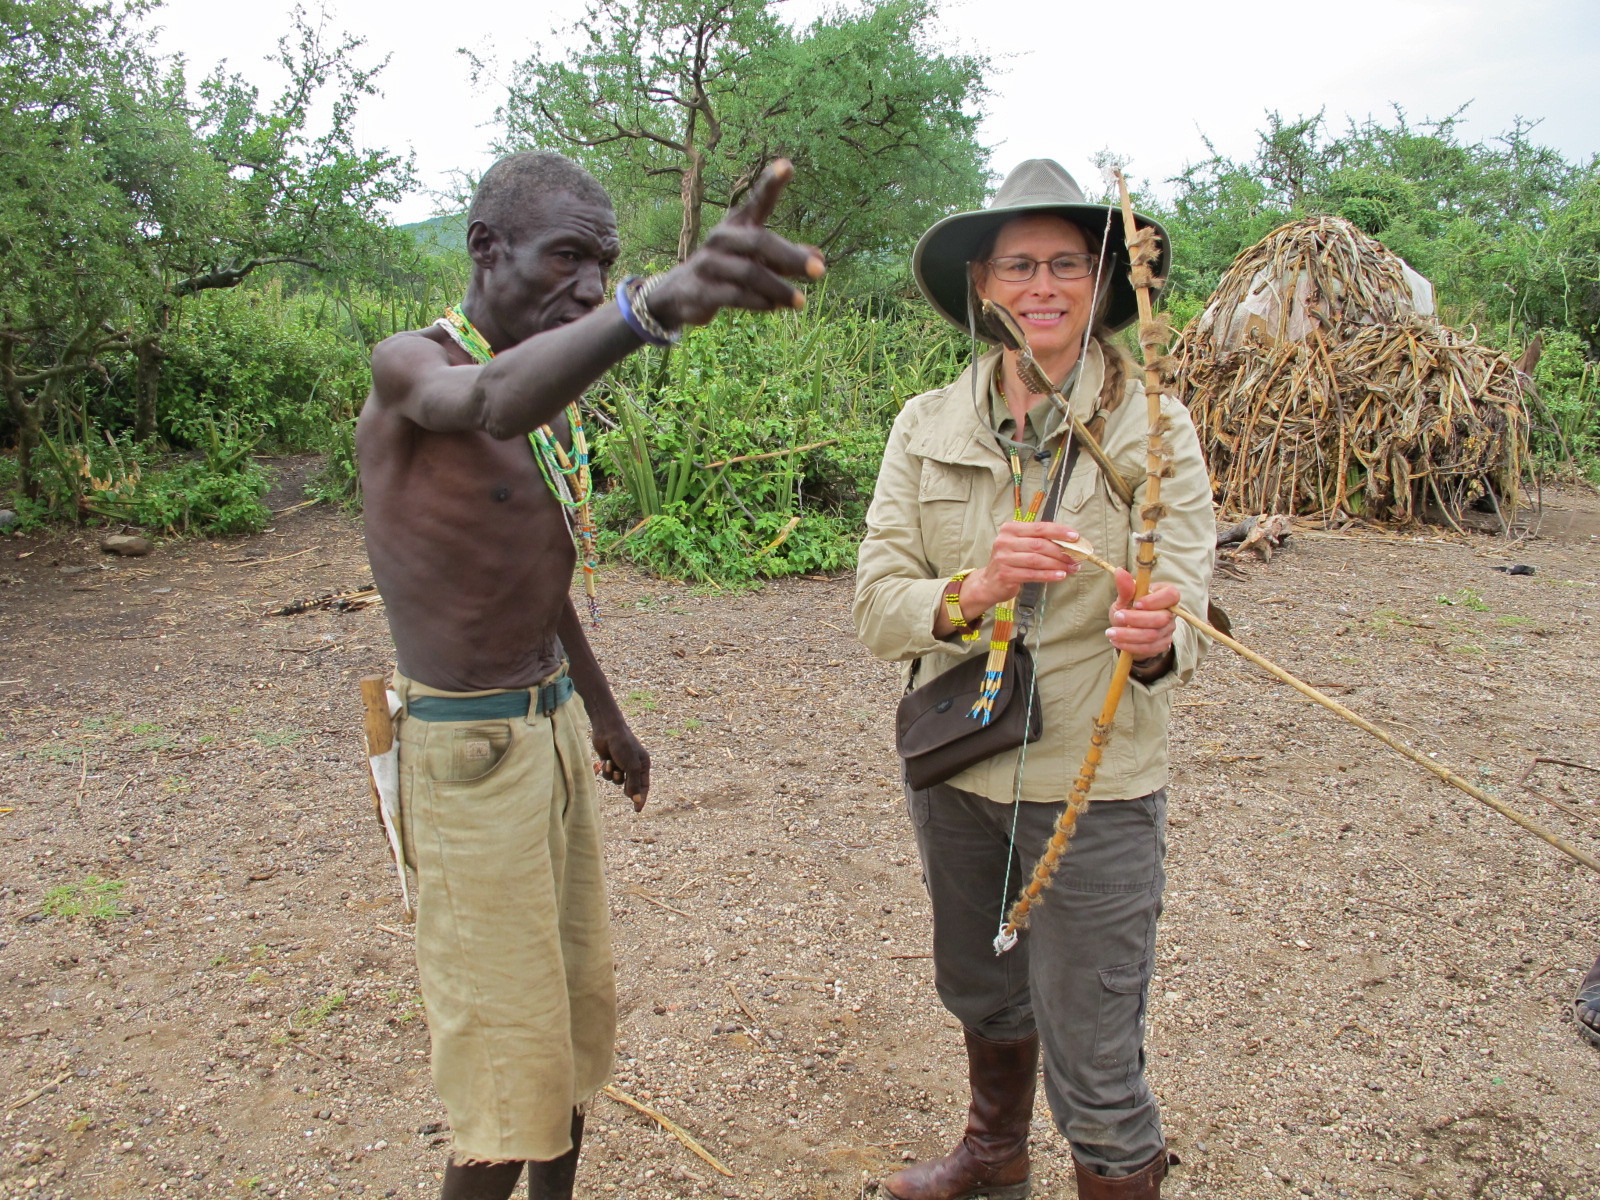 Morongo Tribe elder teaching me bow and arrow, Tanzania